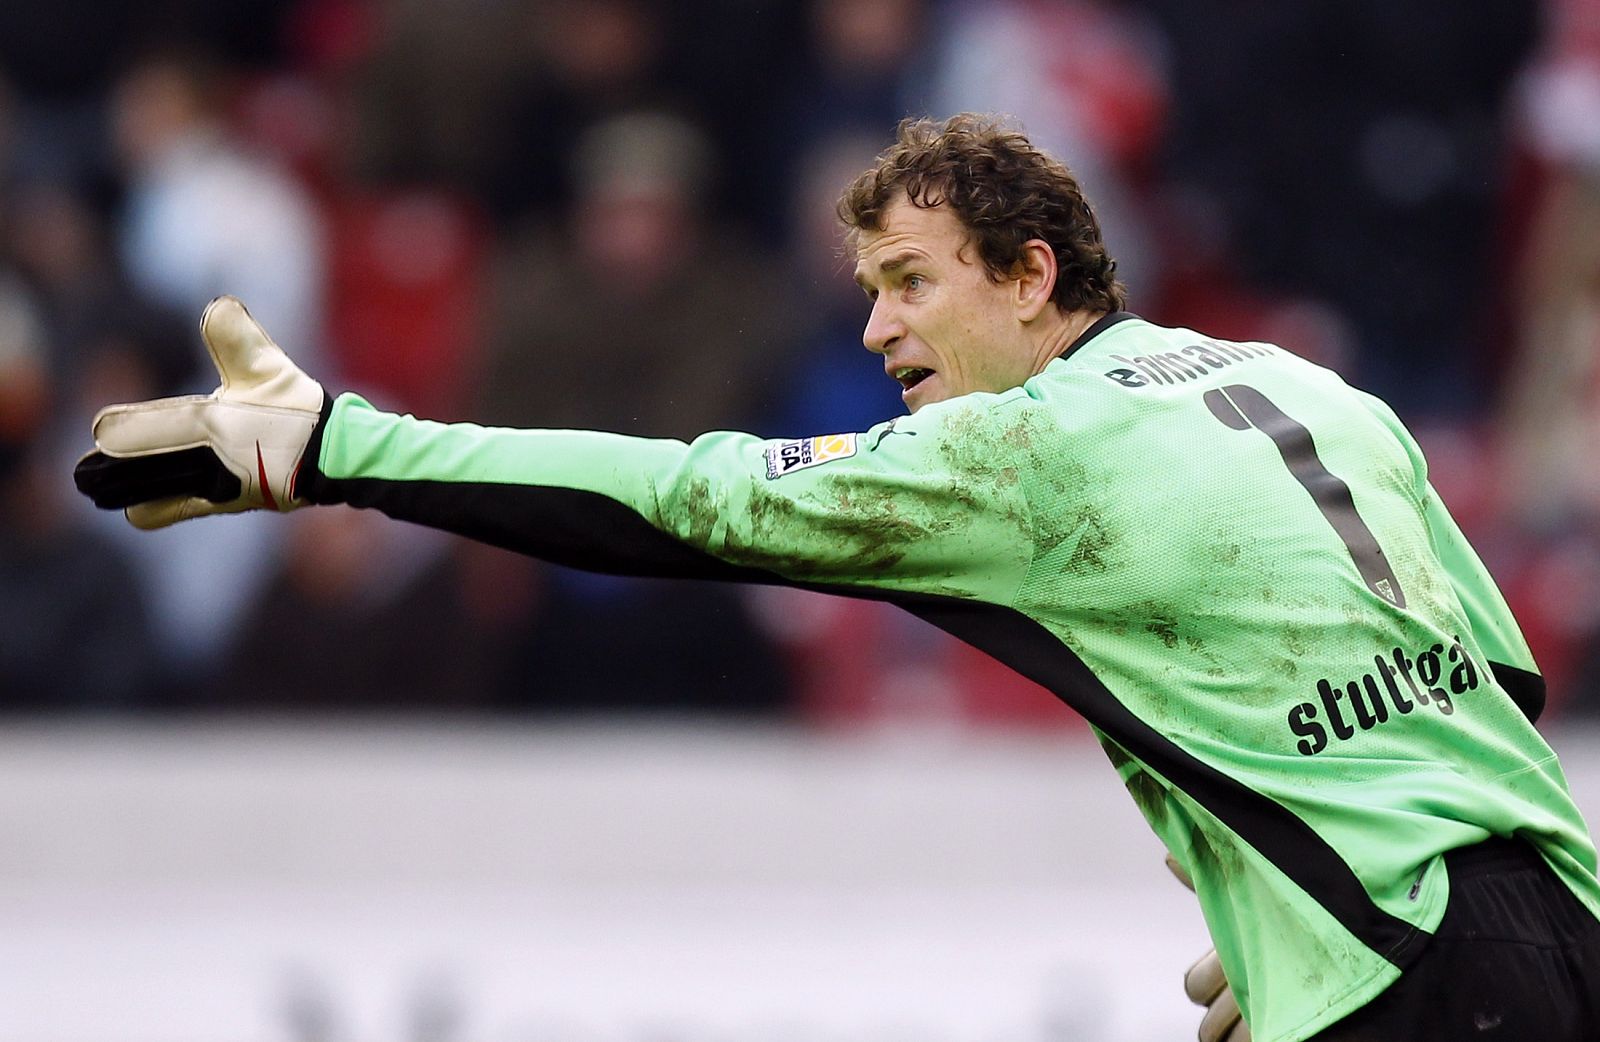 Stuttgart's goalkeeper Lehmann gestures during their German Bundesliga soccer match against Hamburg in Stuttgart